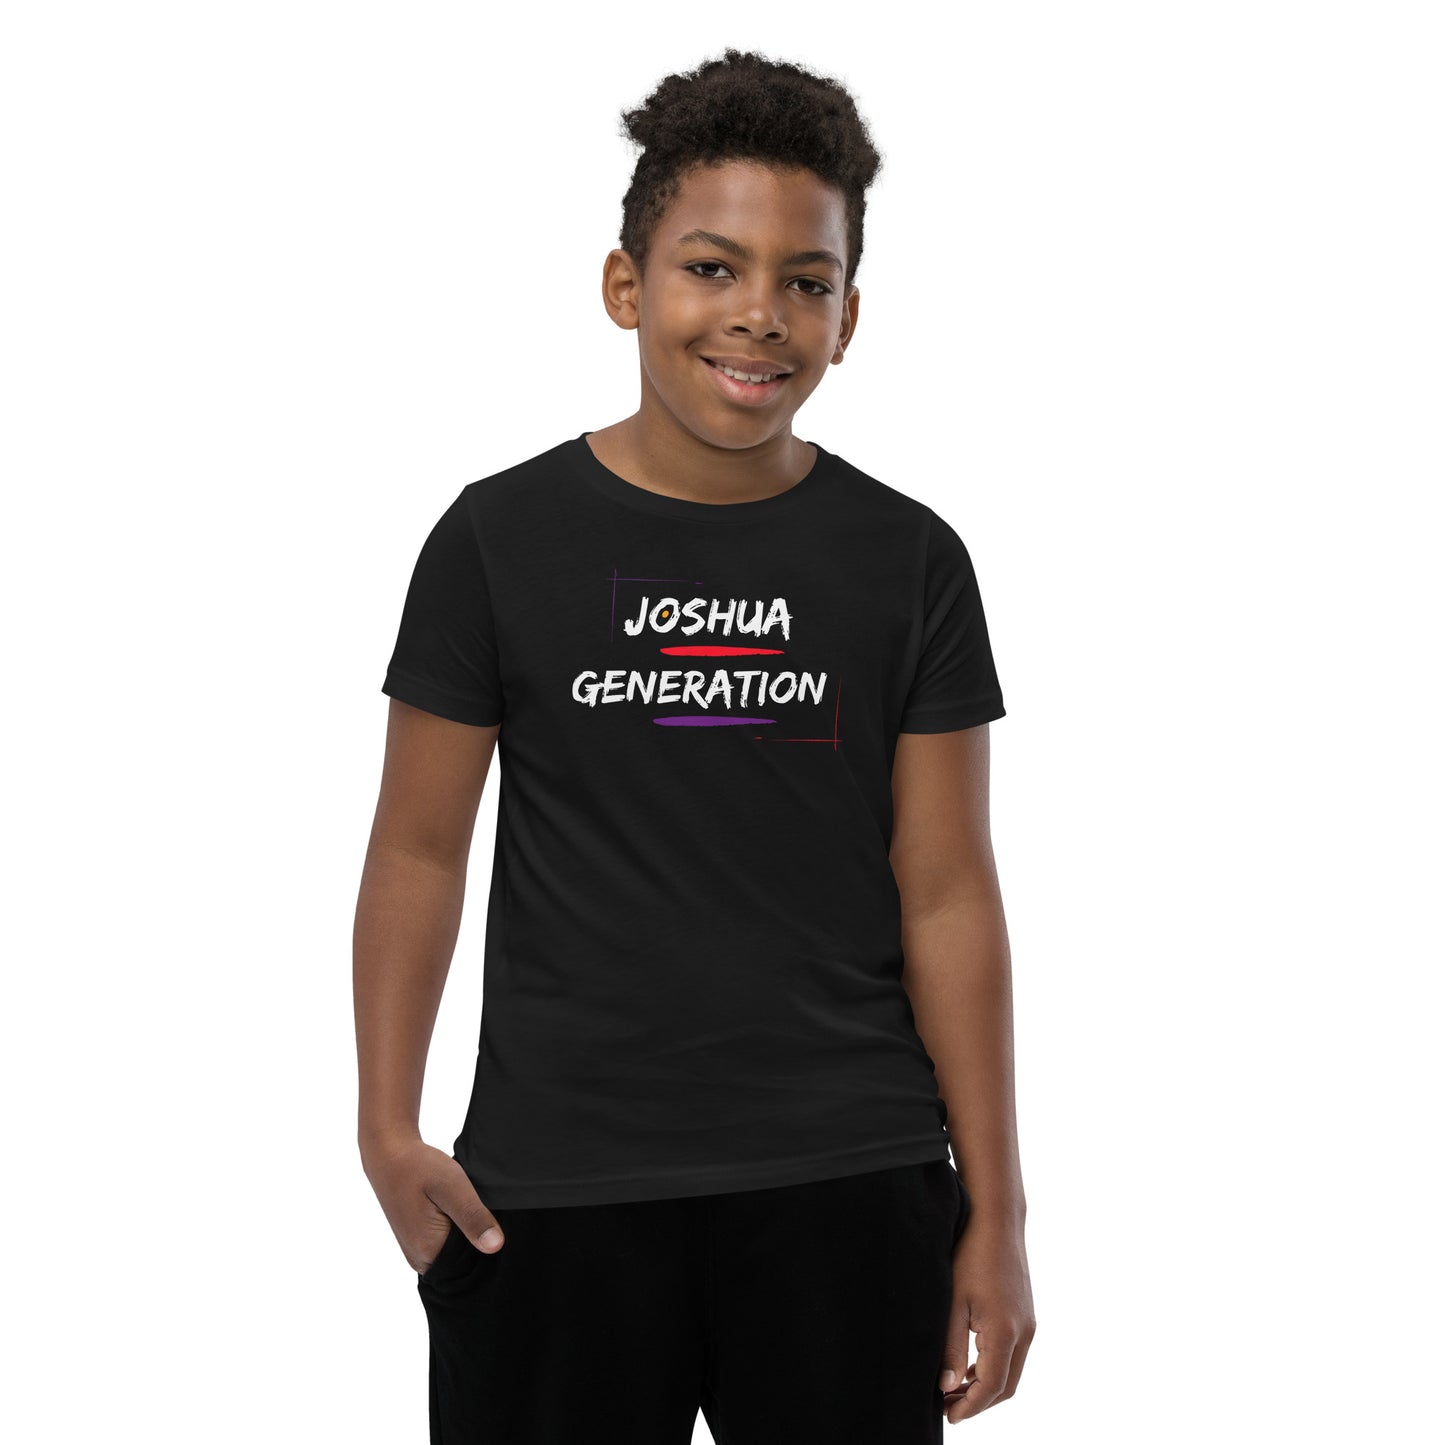 Joshua Generation  Kids Tee